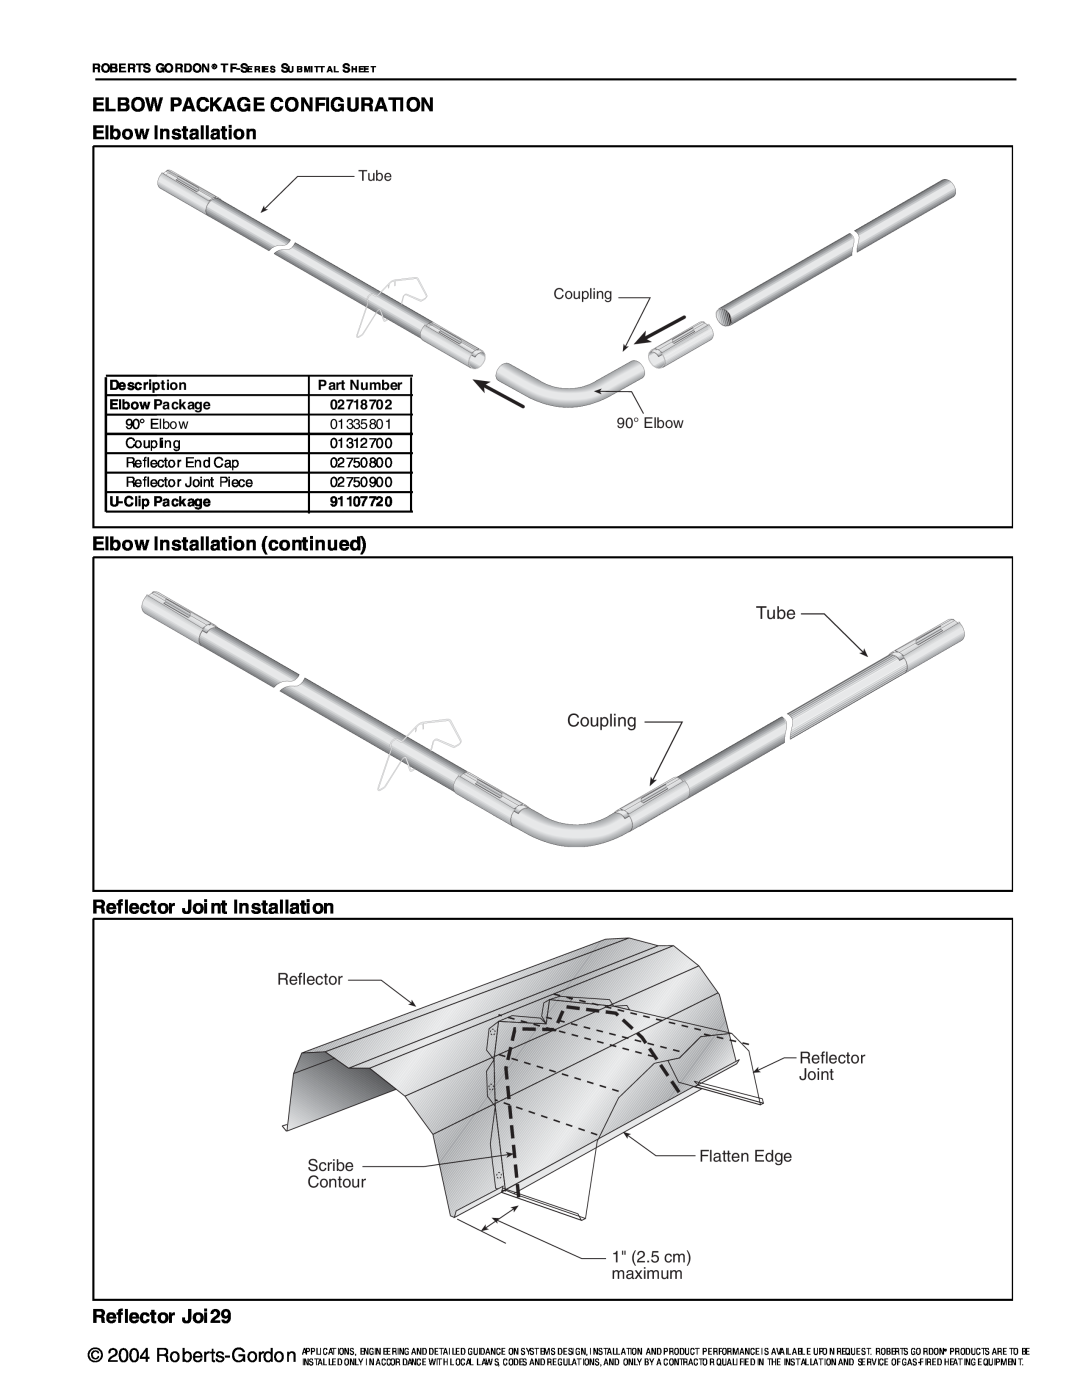 Roberts Gorden TF-Series Reflector Reflector Joint, Scribe, Flatten Edge, Contour, 1 2.5 cm, maximum, Tube, Coupling 